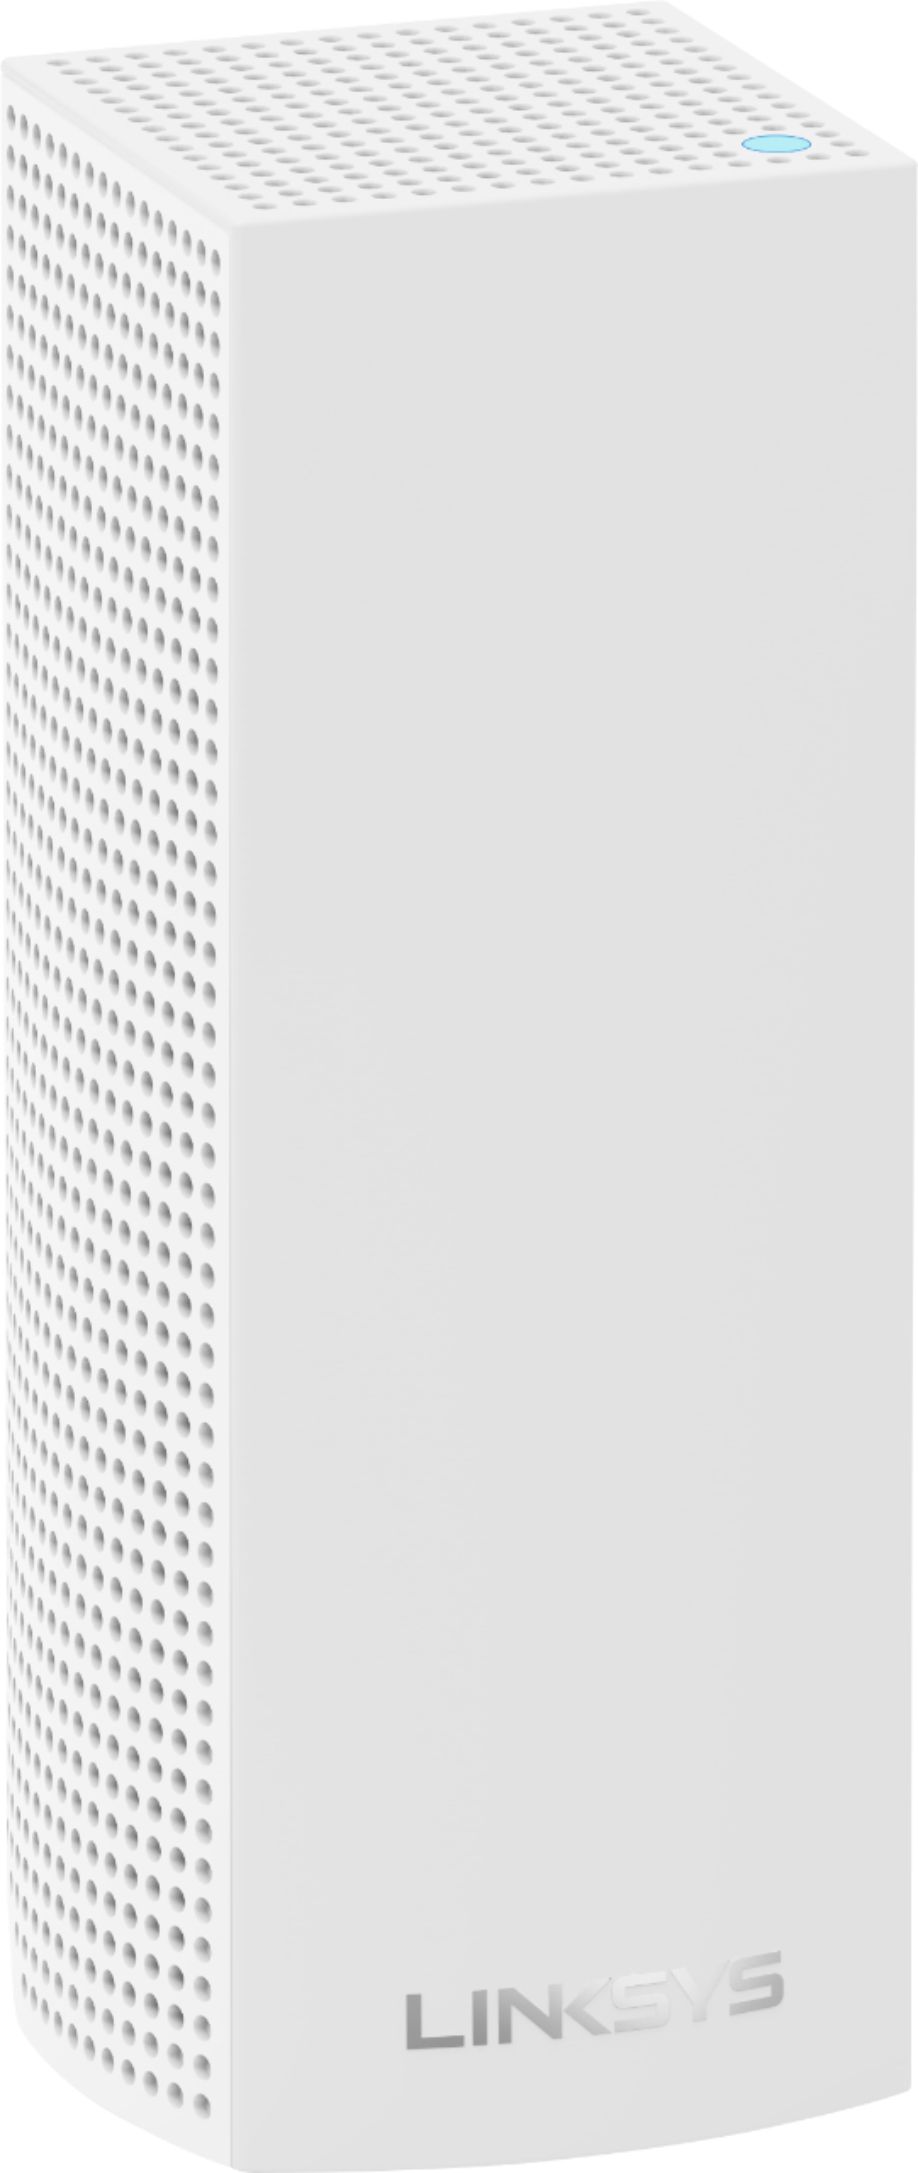 Angle View: NETGEAR - Orbi AC3000 Tri-Band Mesh Wi-Fi System (2-pack) - White